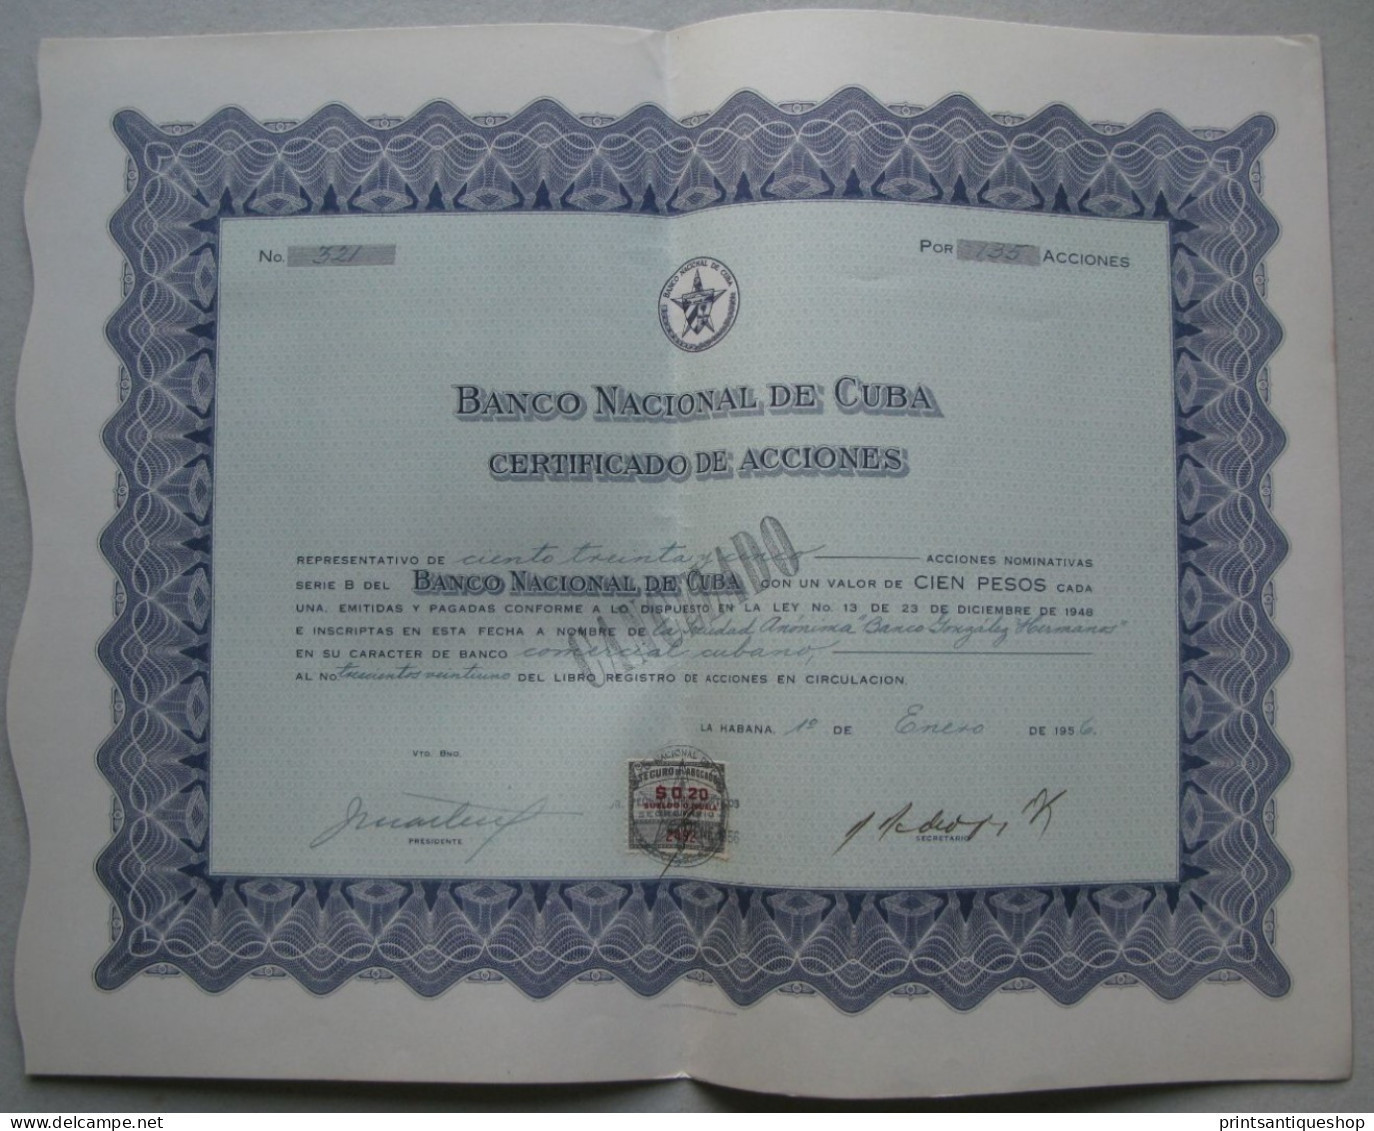 1956 Banco Nacional De Cuba Emprunt Aktie Obligation Bond BONO Certificate $100 Habana Havana In Spanish - Bank & Insurance